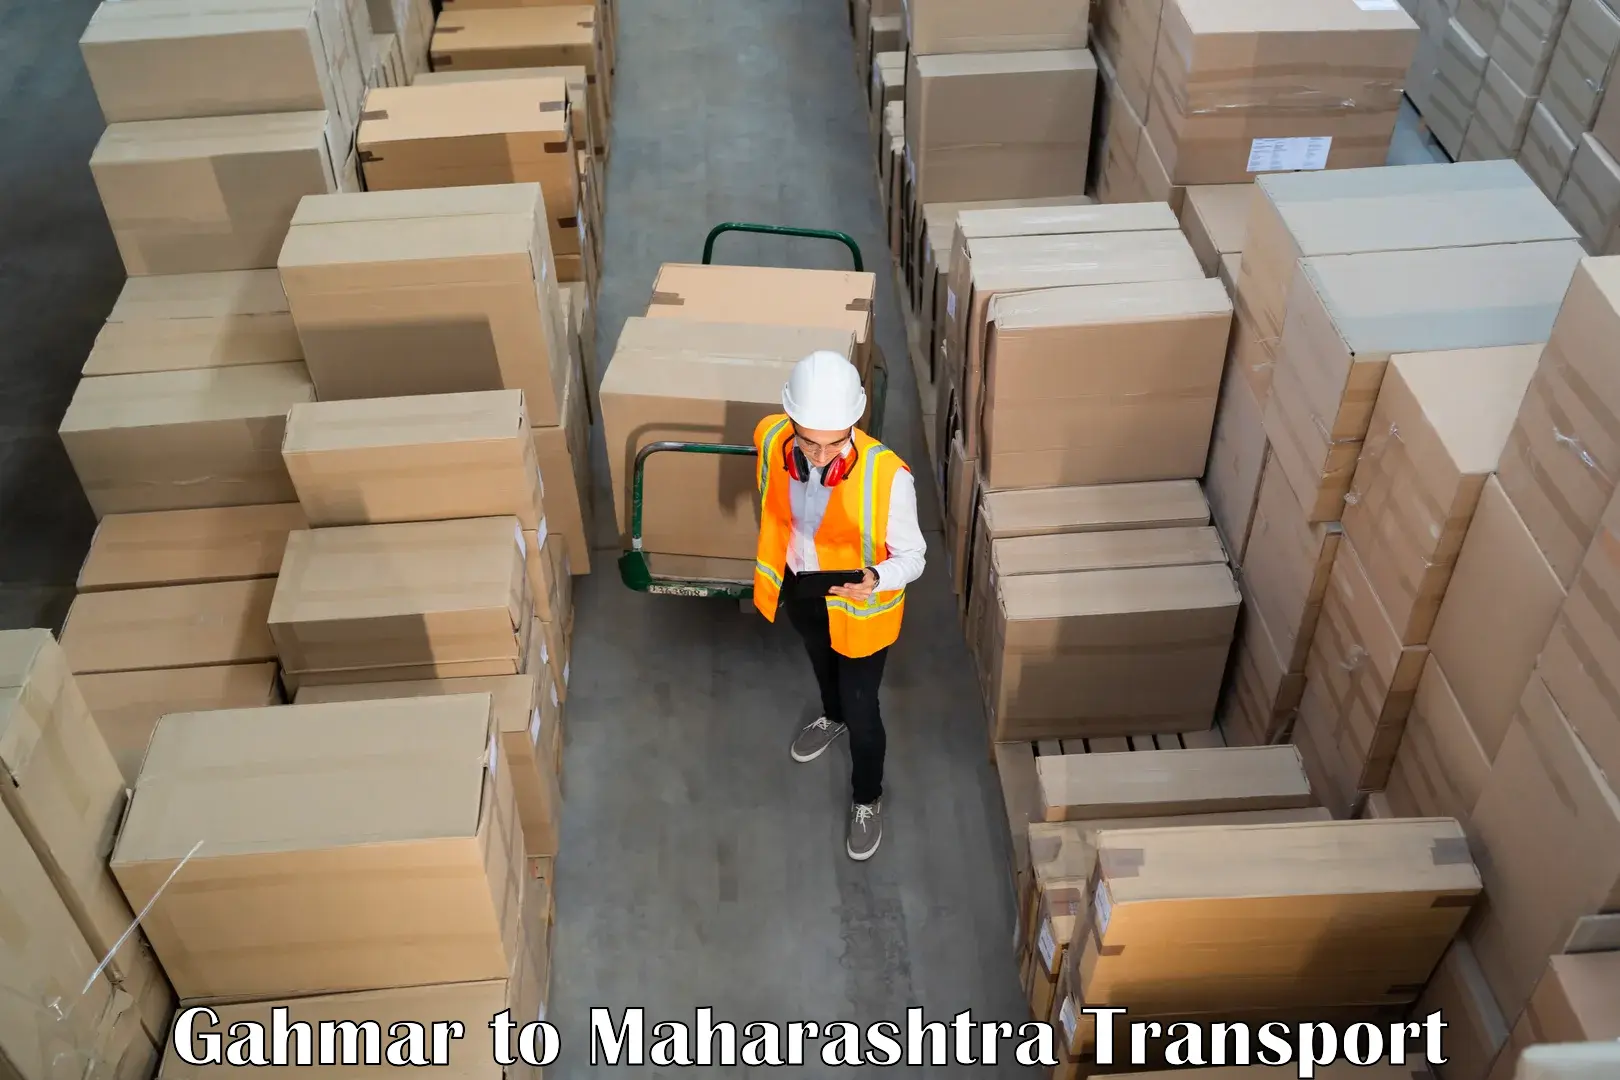 Truck transport companies in India Gahmar to Shegaon